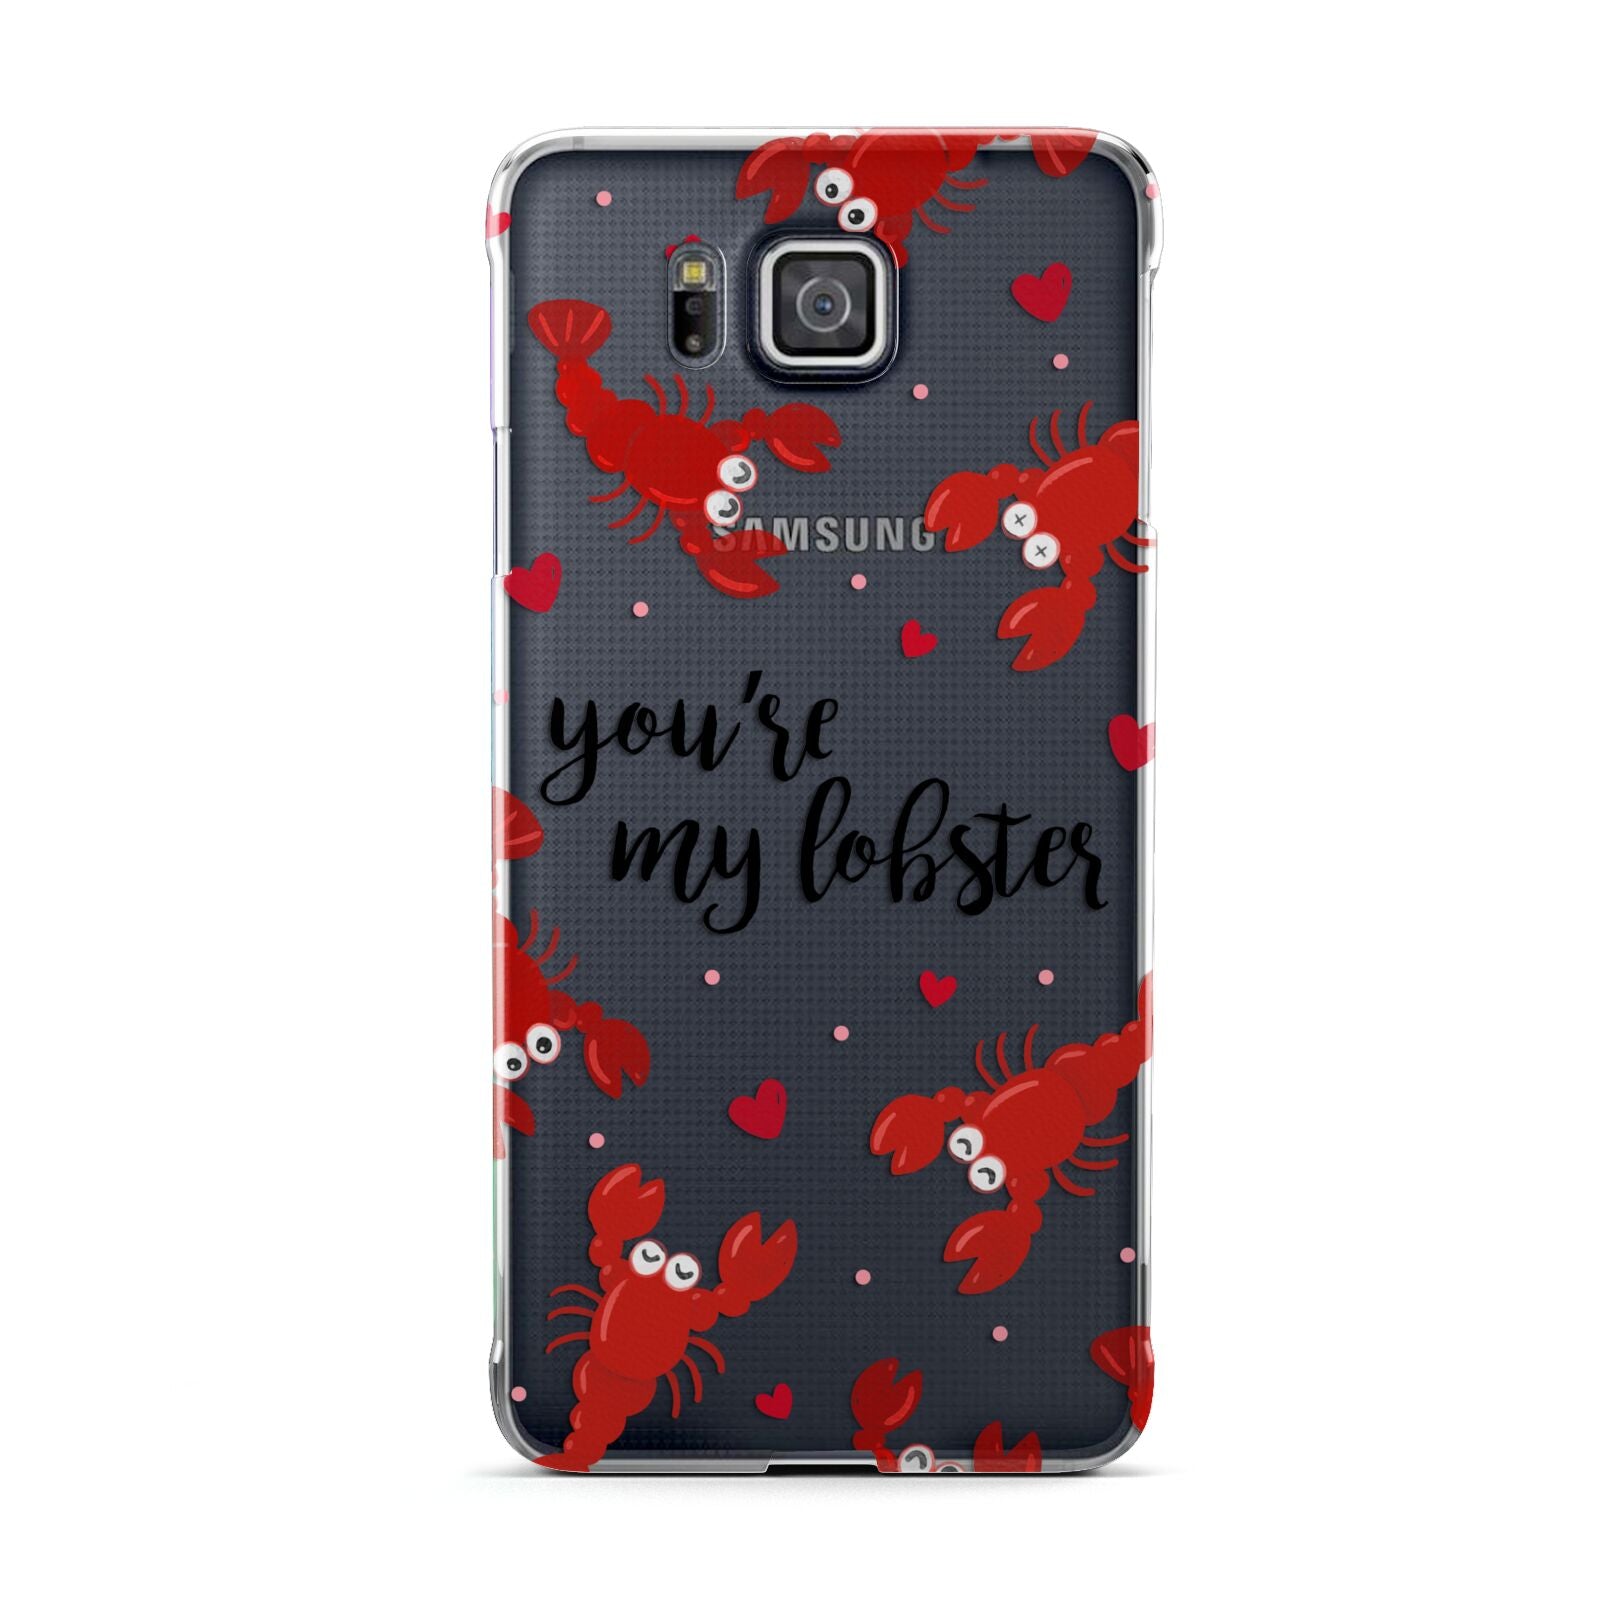 Youre My Lobster Samsung Galaxy Alpha Case